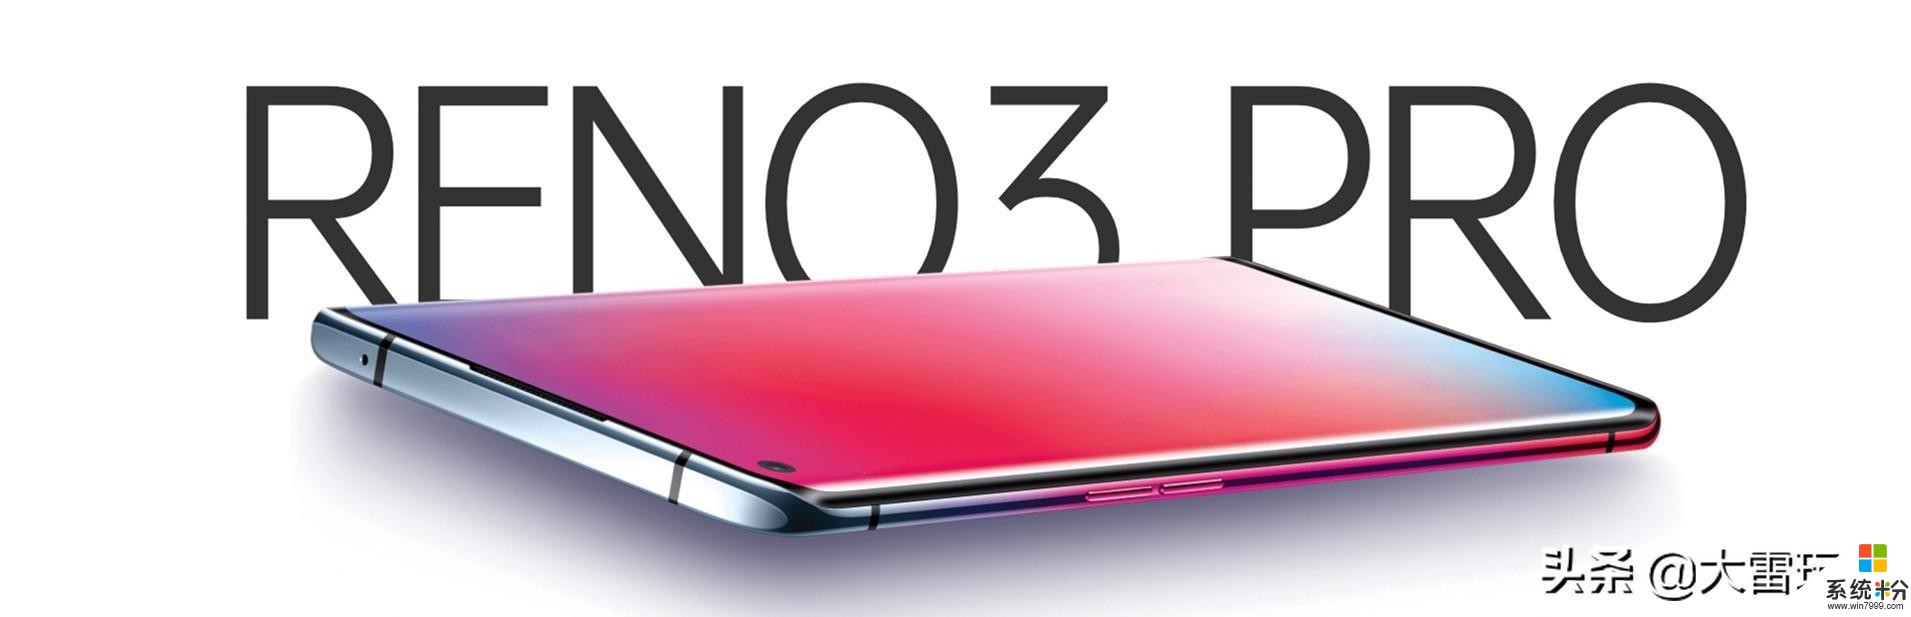 「Reno3係列評測」5G超薄視頻手機OPPOReno3Pro上手淺評(1)